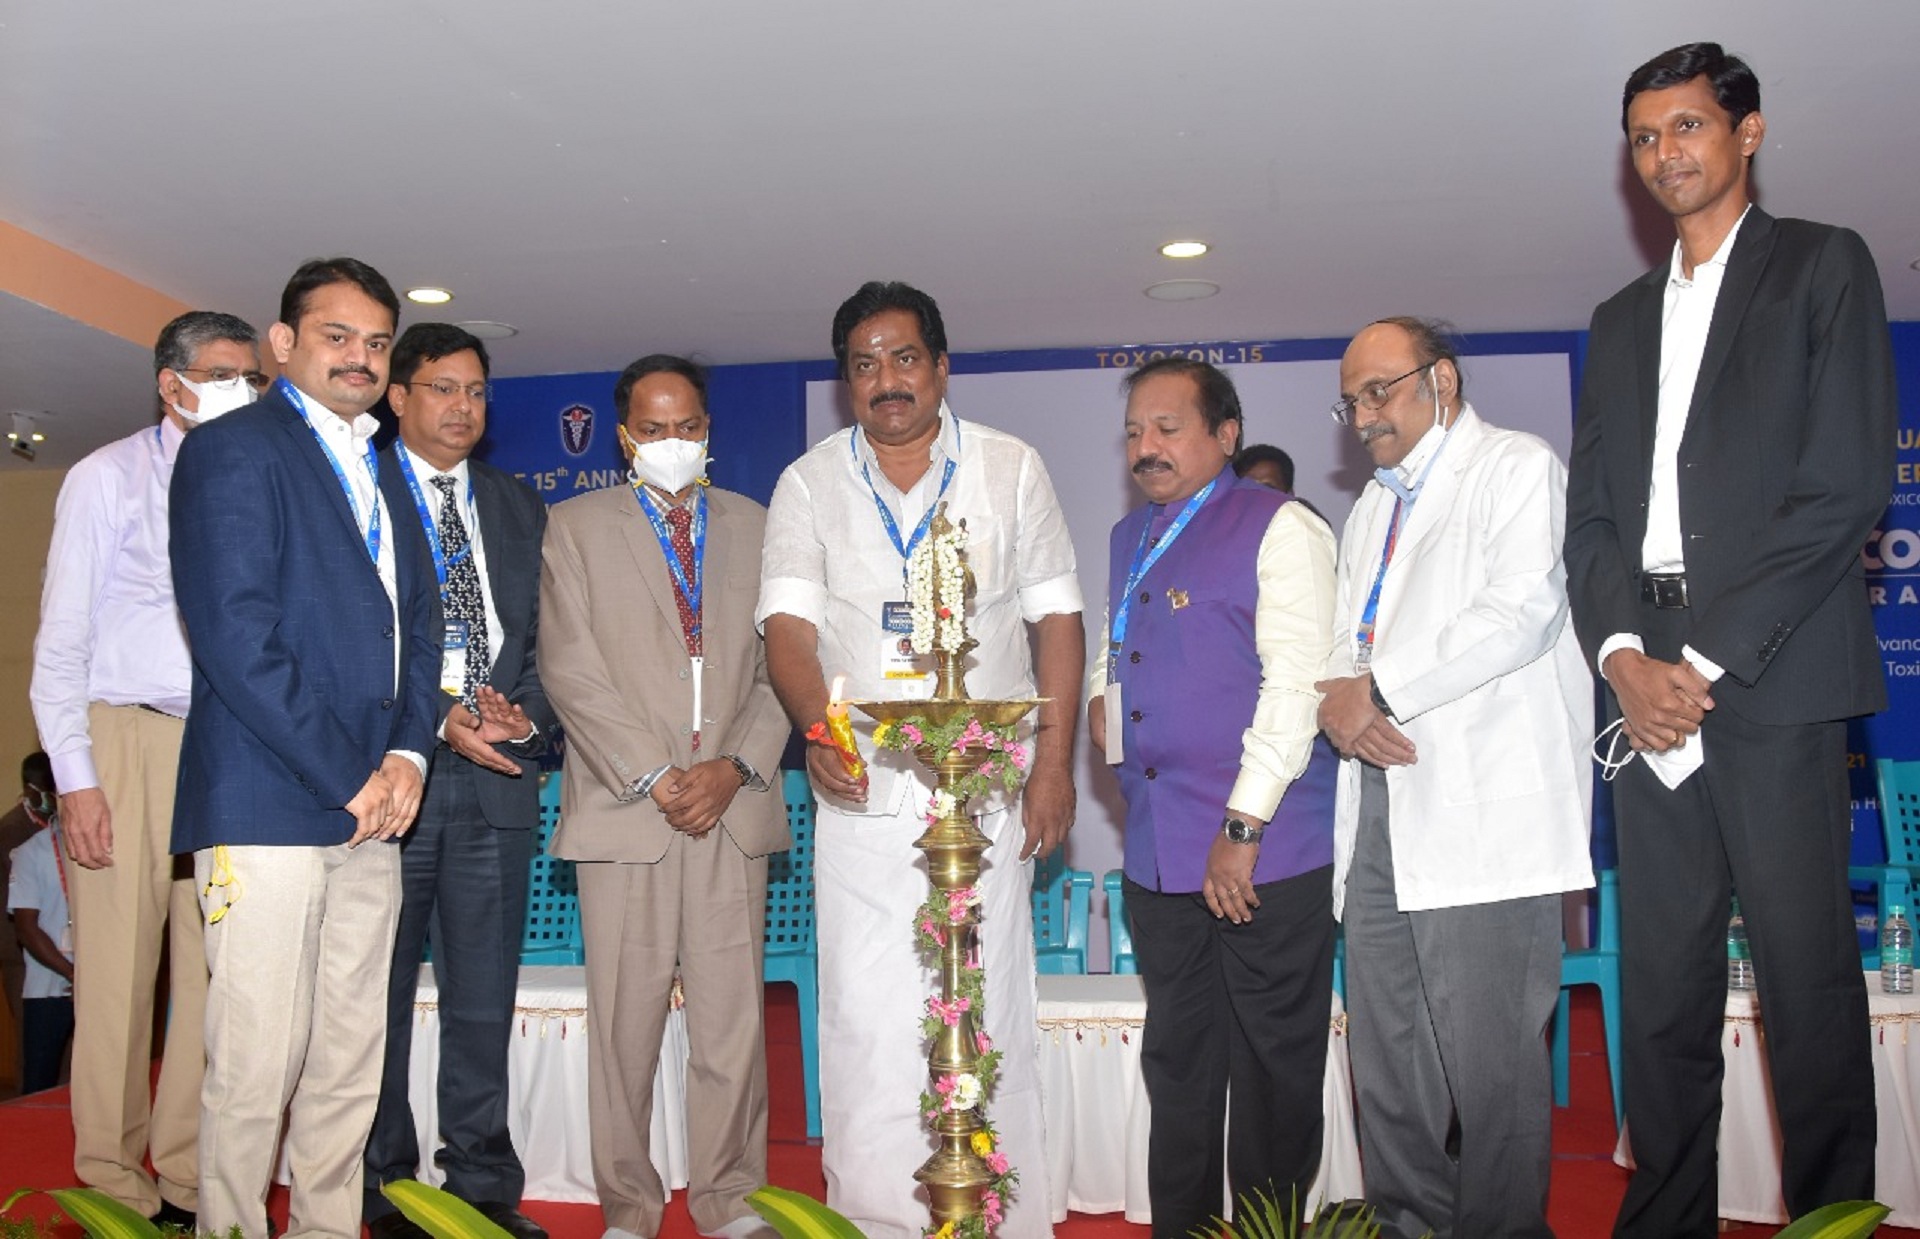 Meenakshi Mission Hospital, Madurai inaugurates ‘TOXOCON-15’ conference